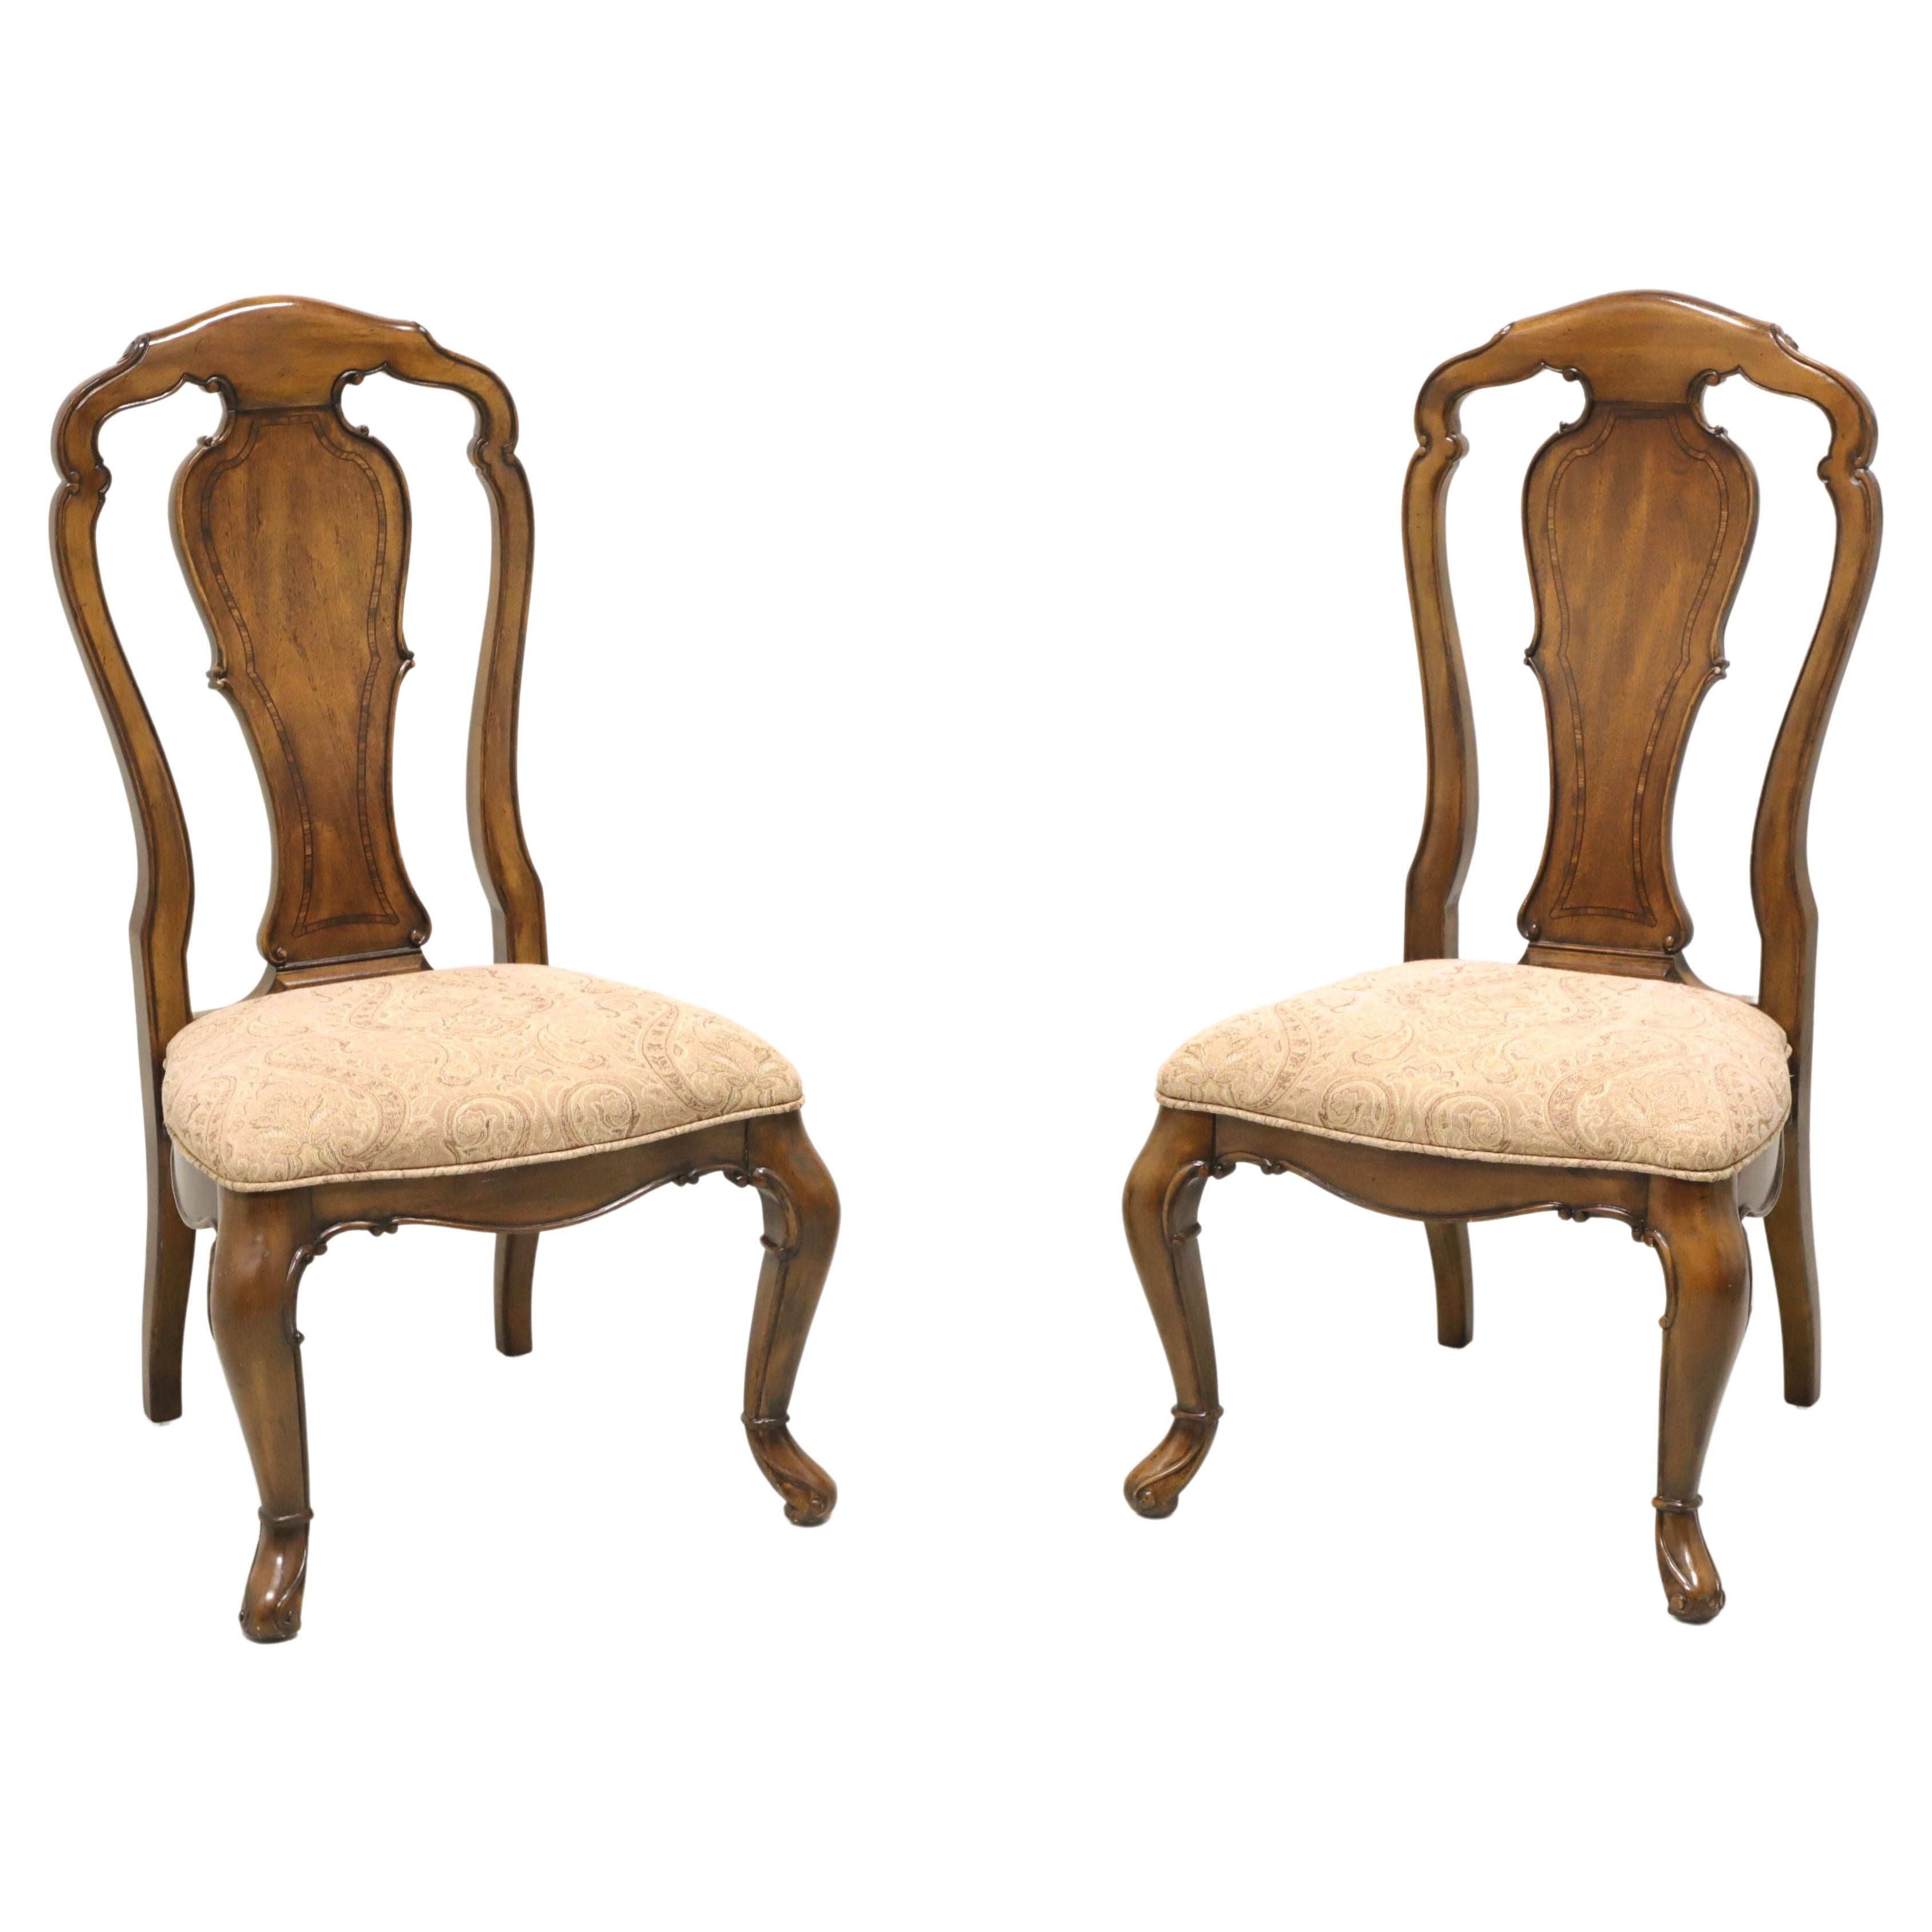 THOMASVILLE Hemingway Collection Granada Mahogany Dining Side Chairs - Pair B